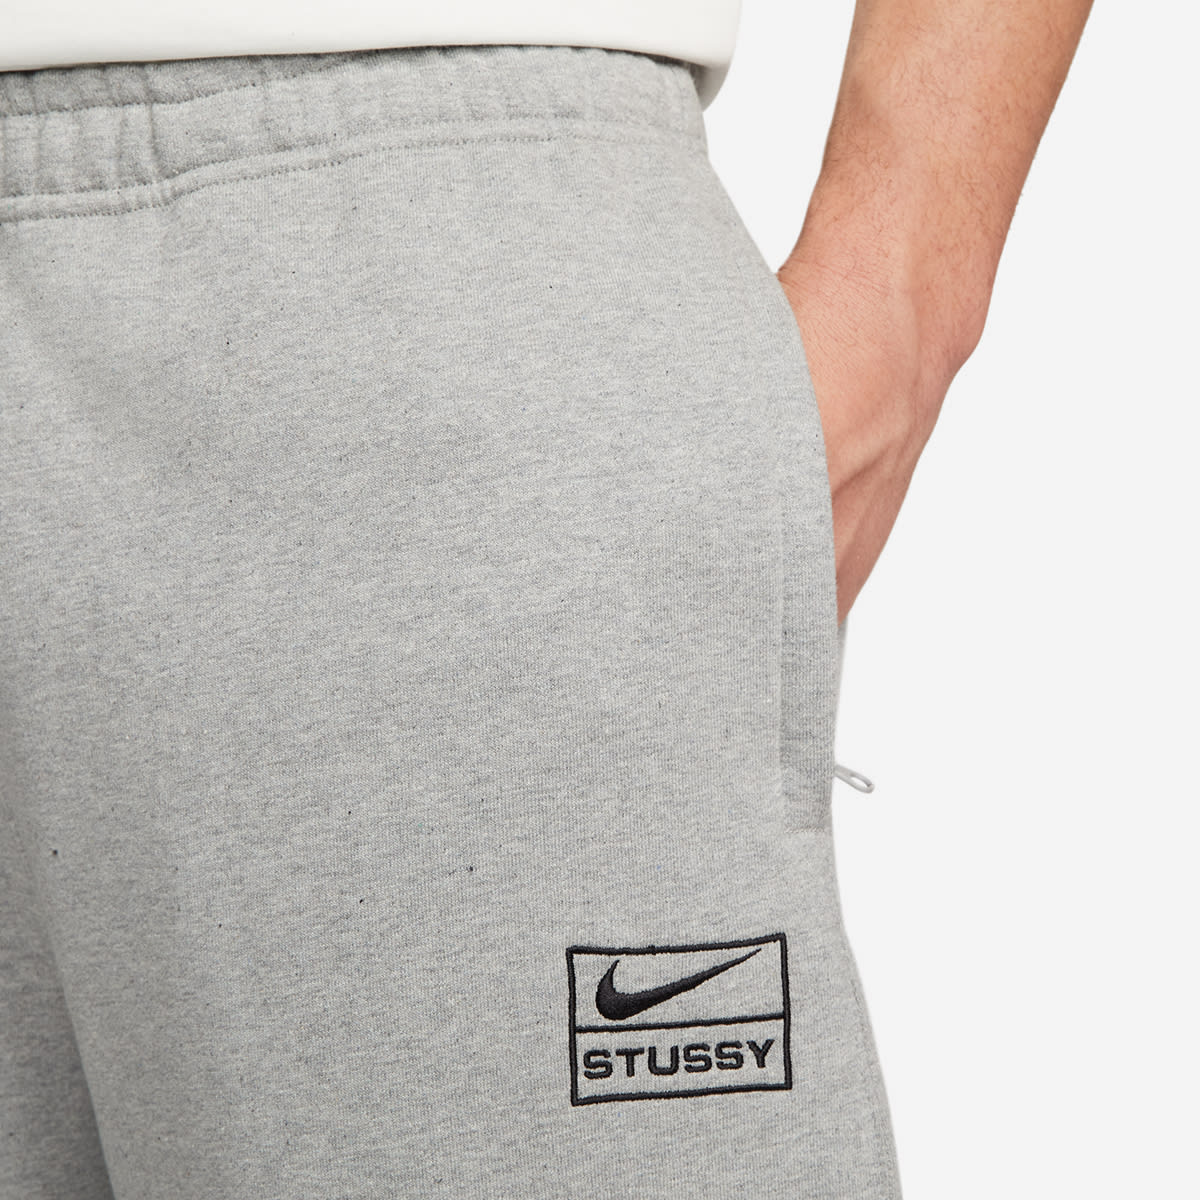 Nike Nike x Stussy FLEECE PANT Grey - DK GREY HEATHER